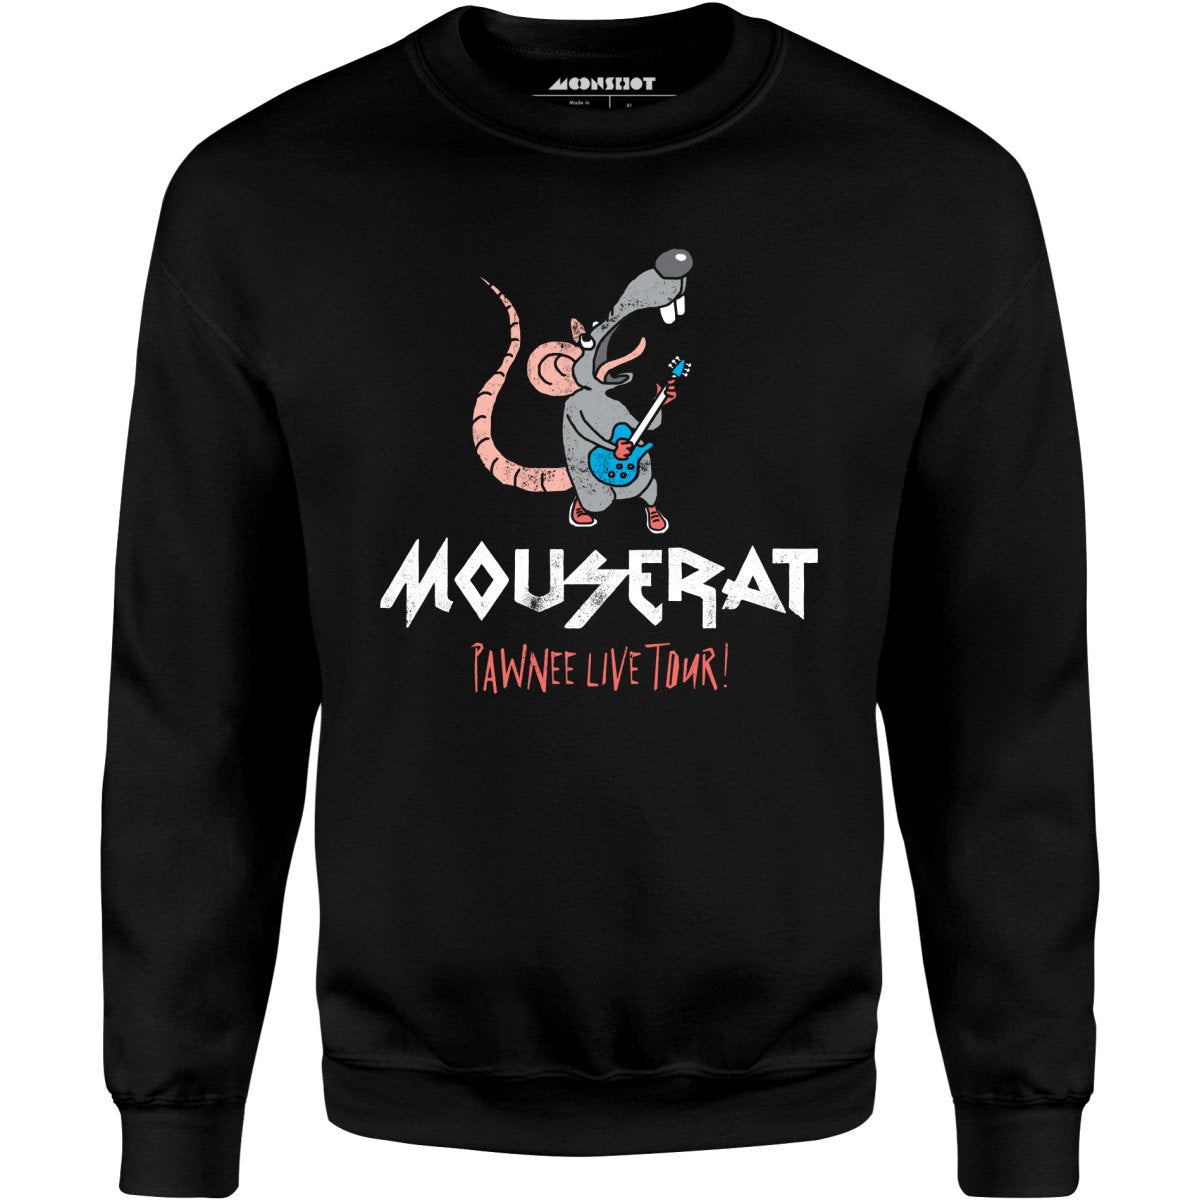 Mouse Rat - Pawnee Live Tour - Unisex Sweatshirt